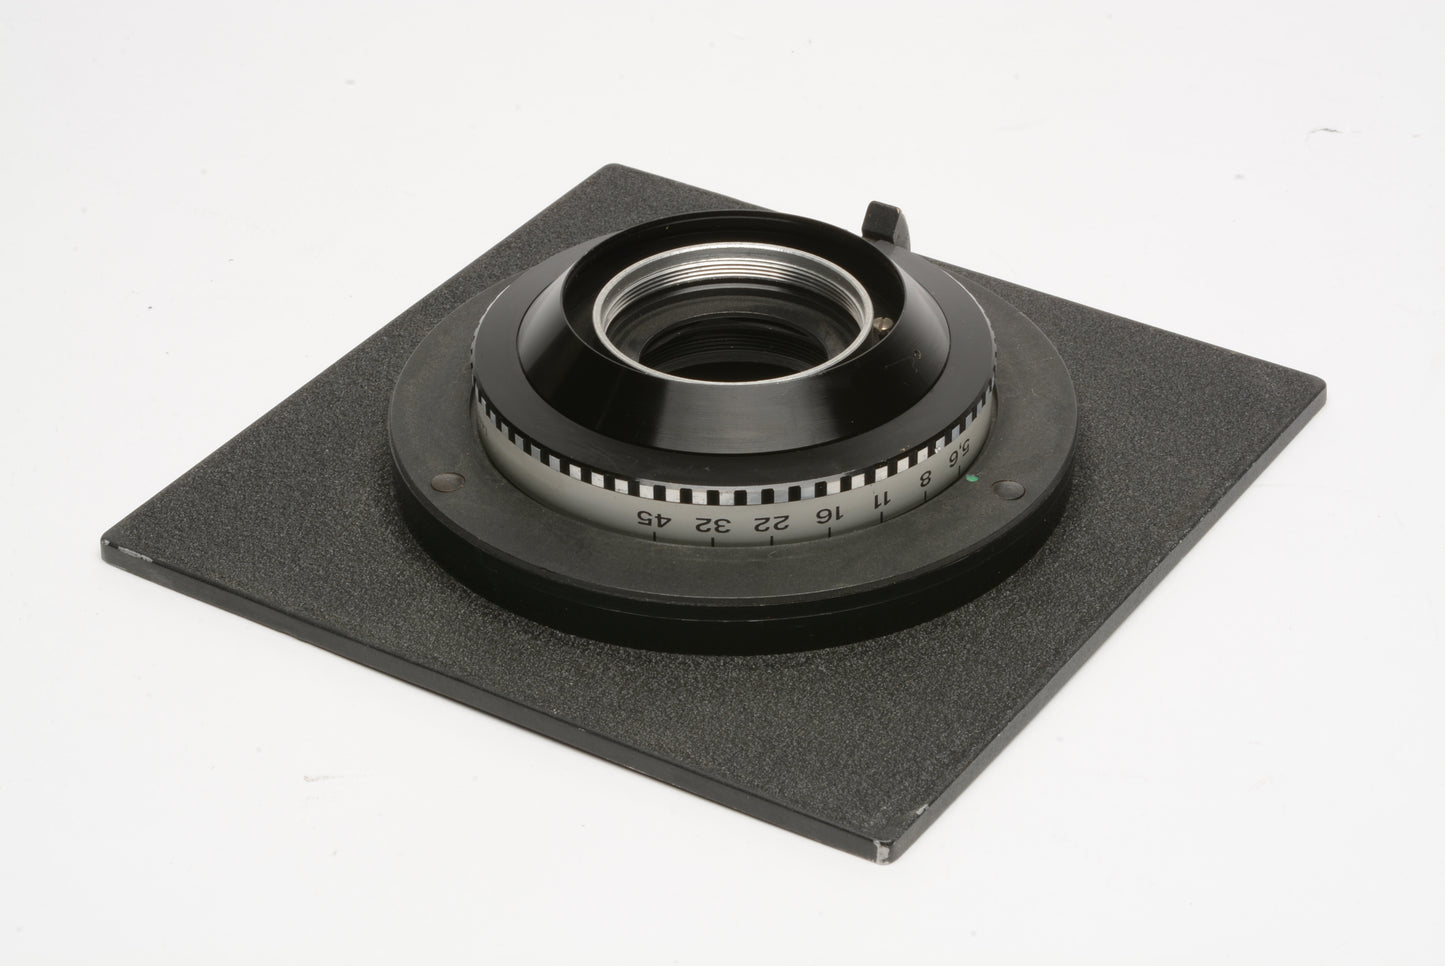 Sinar DB lens board F5.6 - f45 for 4x5 cameras